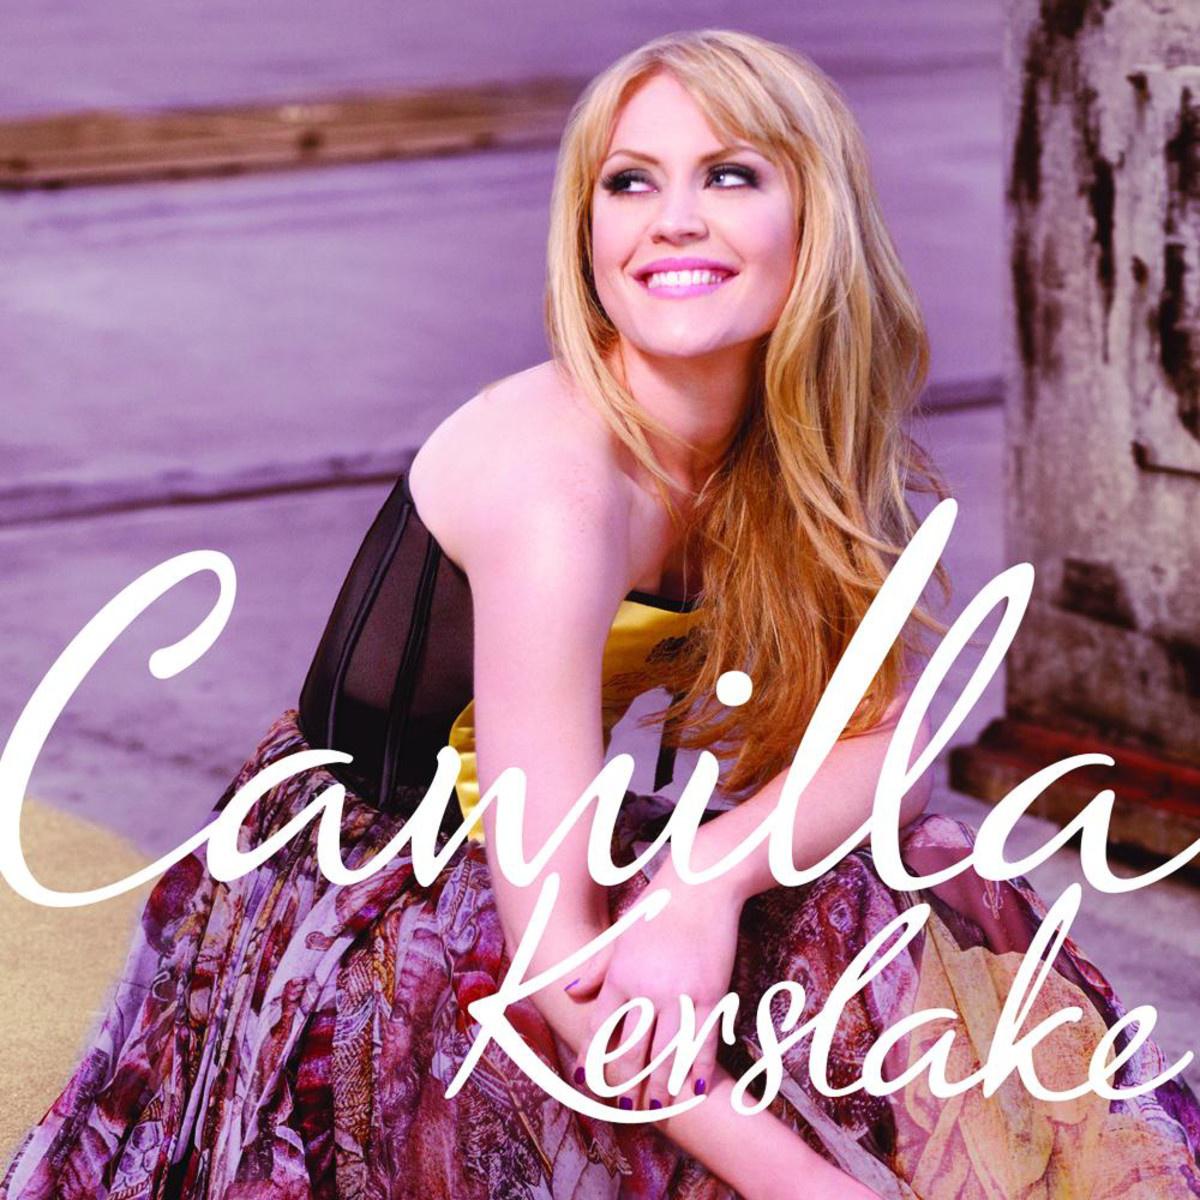 Camilla Kerslake - I Can't Help Falling In Love